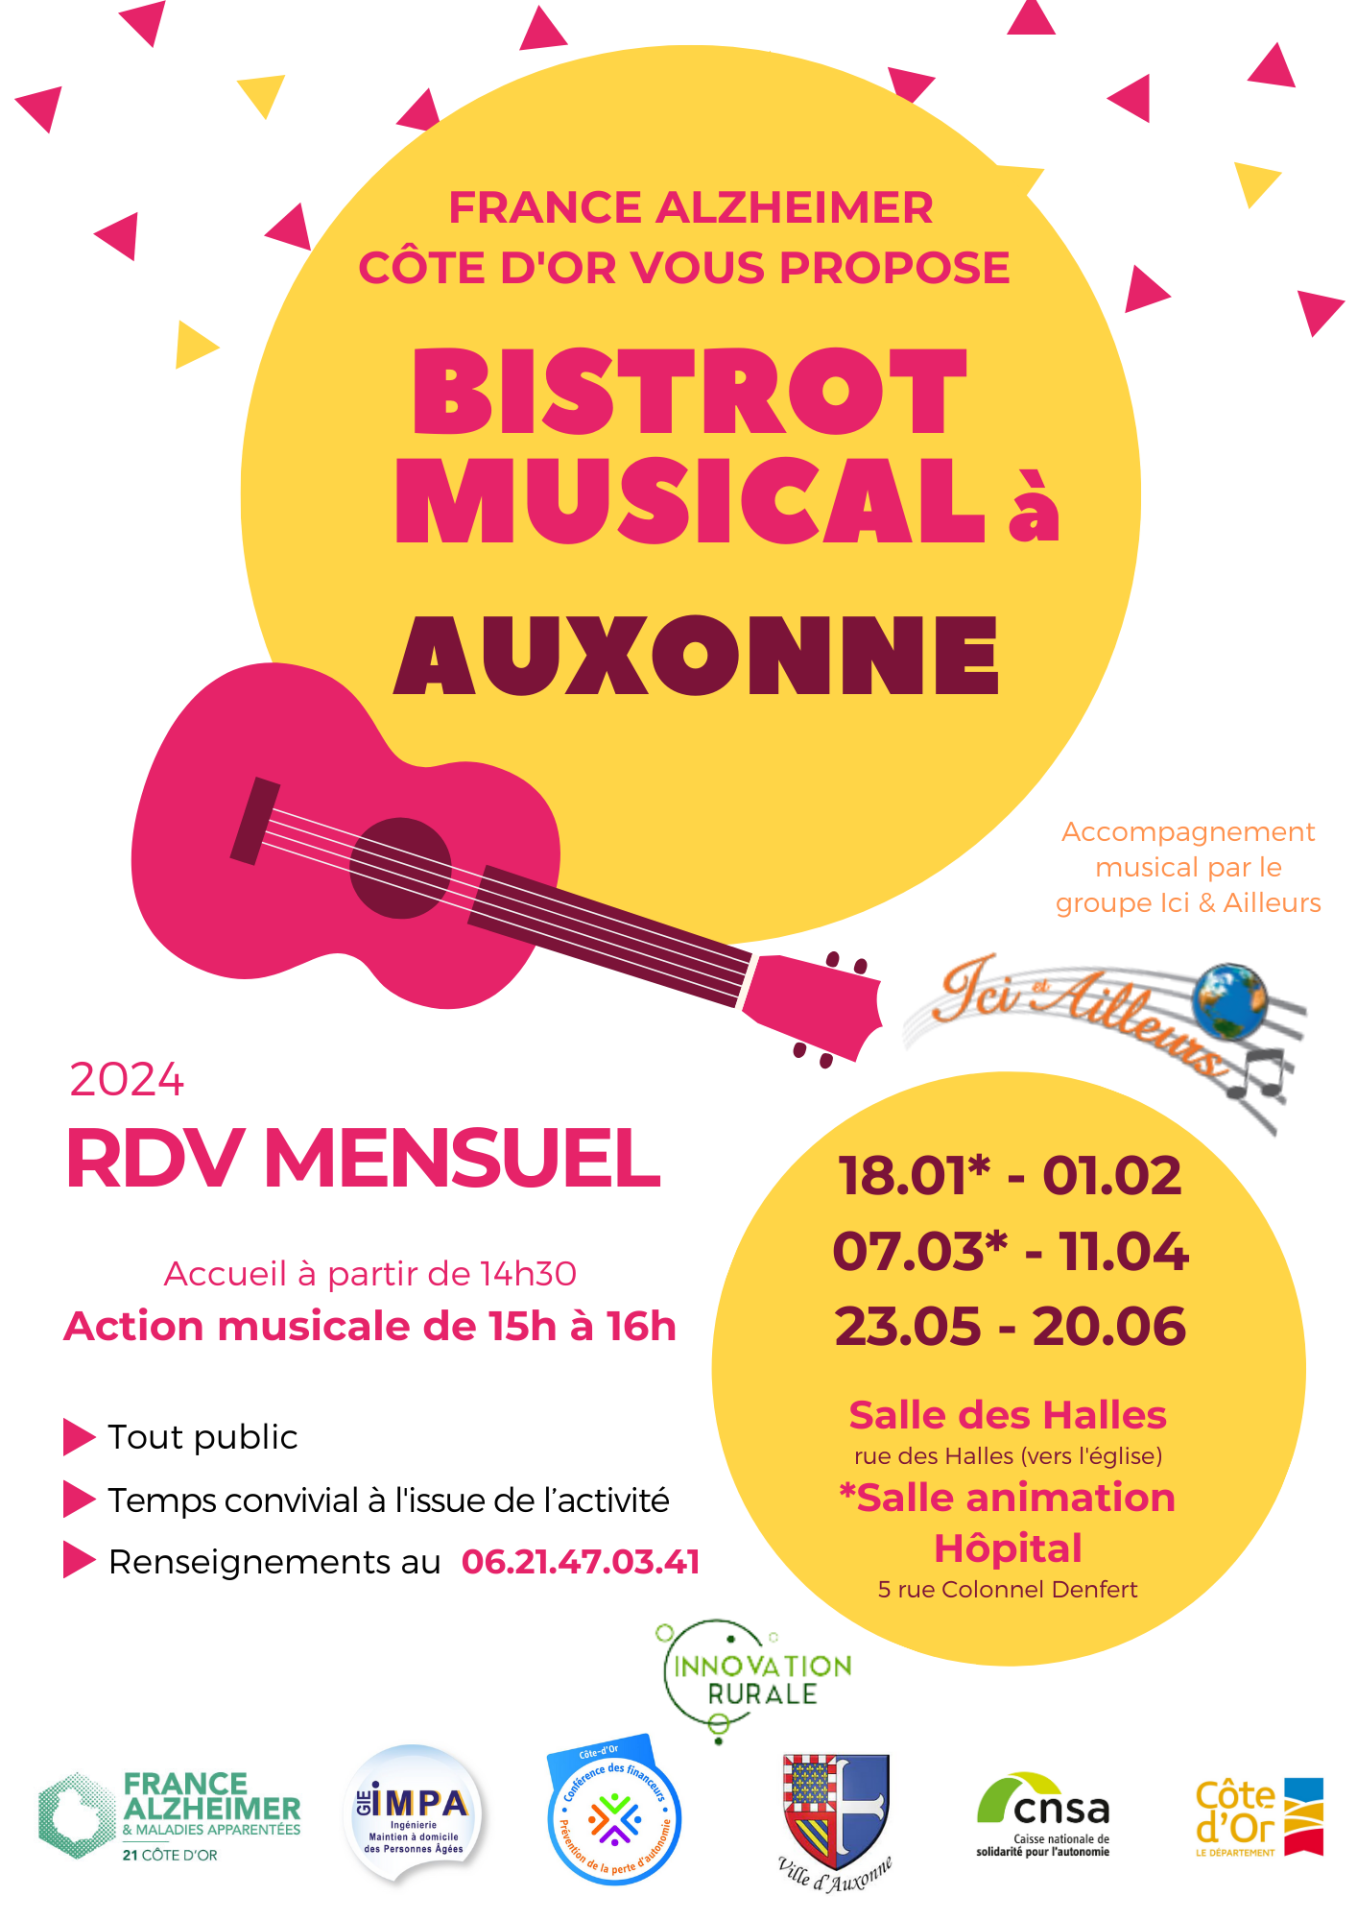 Bistrot musical France Alzheimer